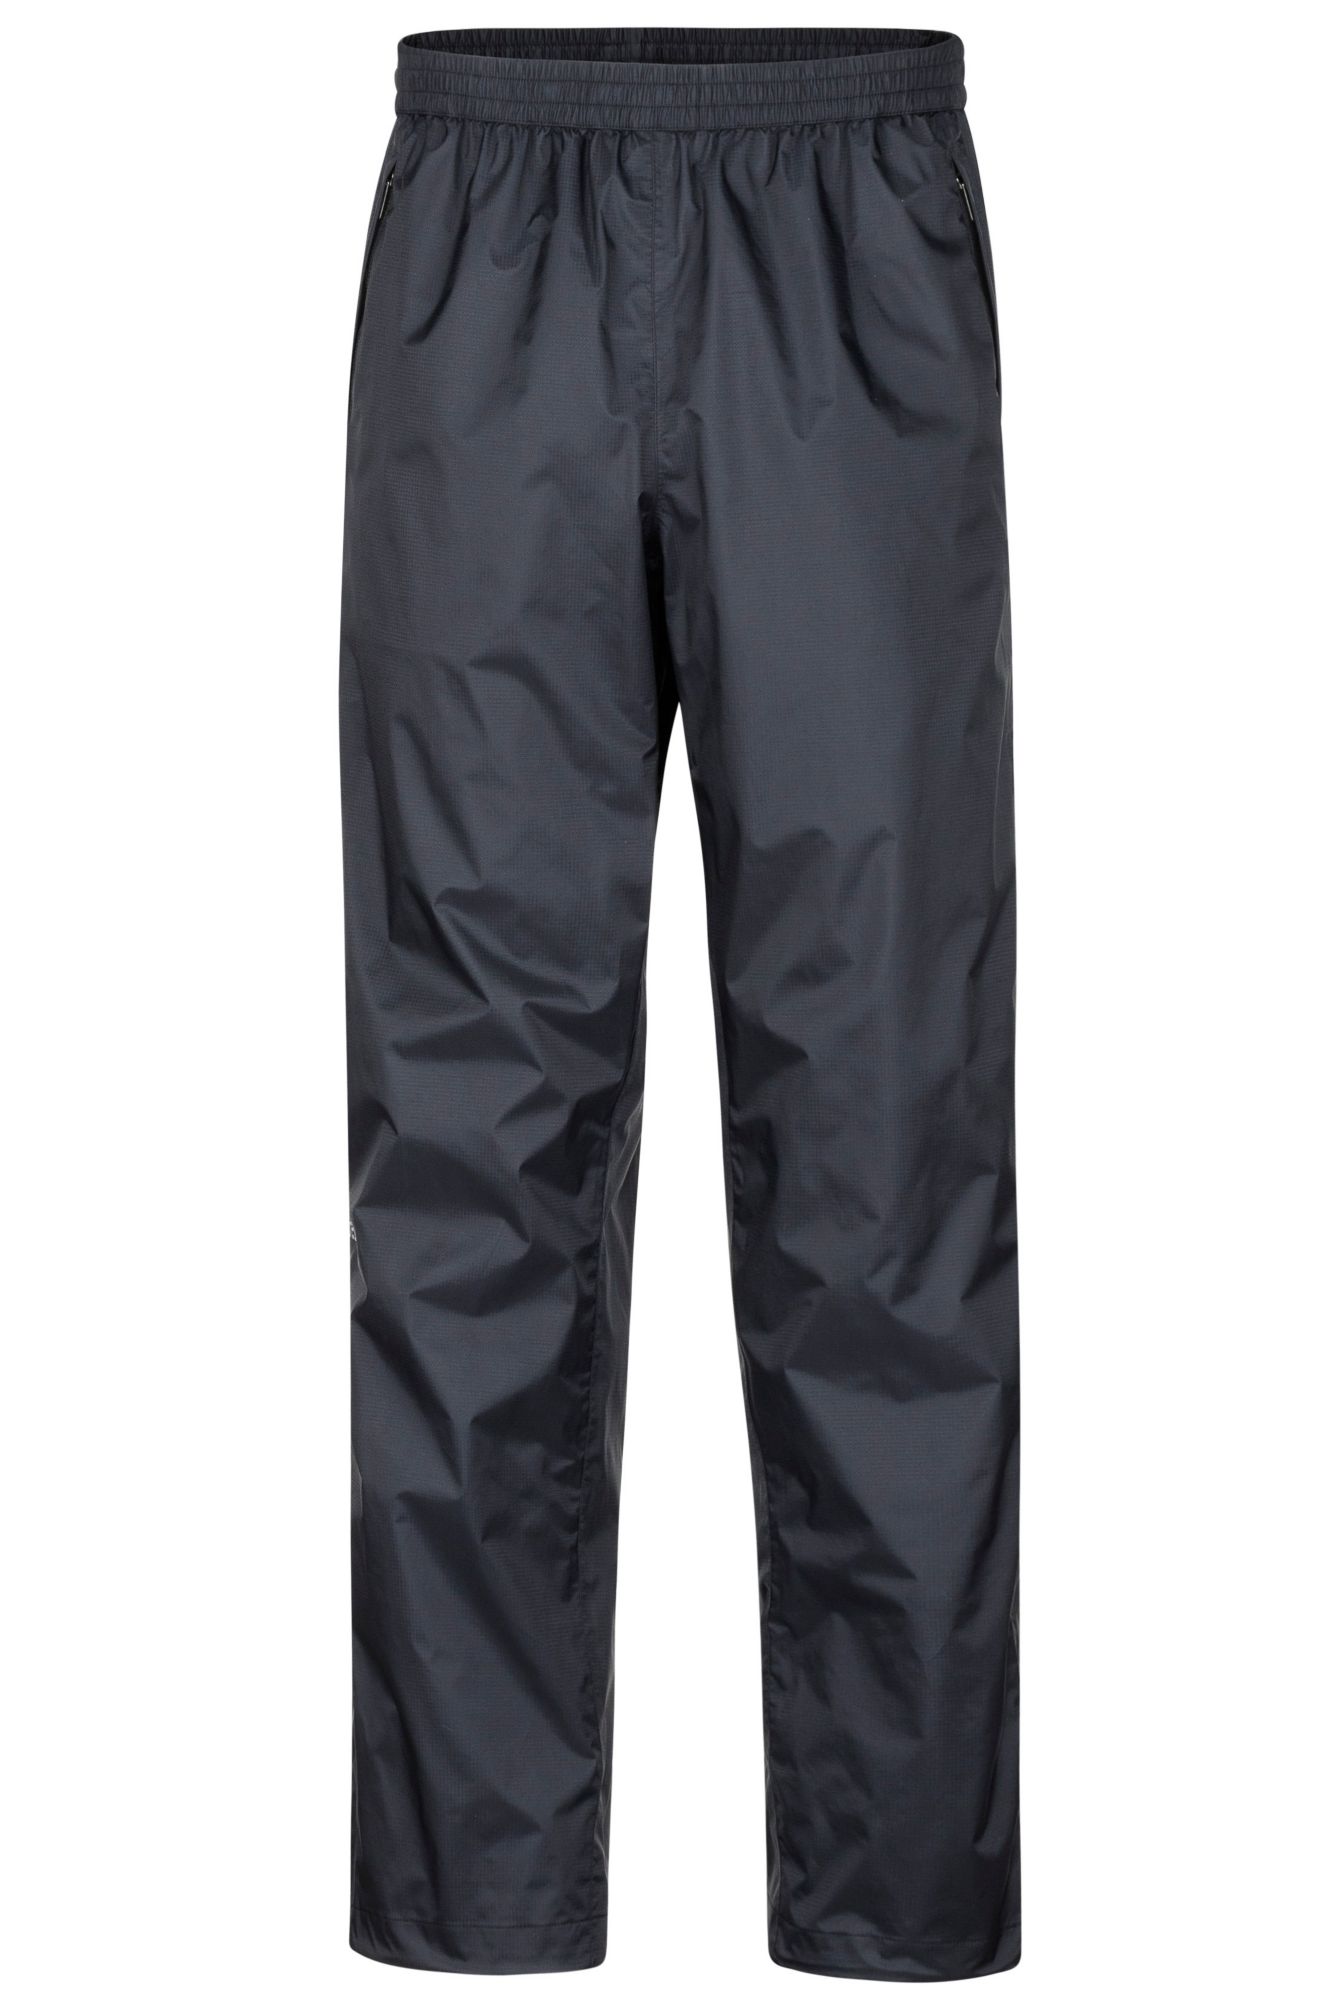 Men's Waterproof & Rain Pants